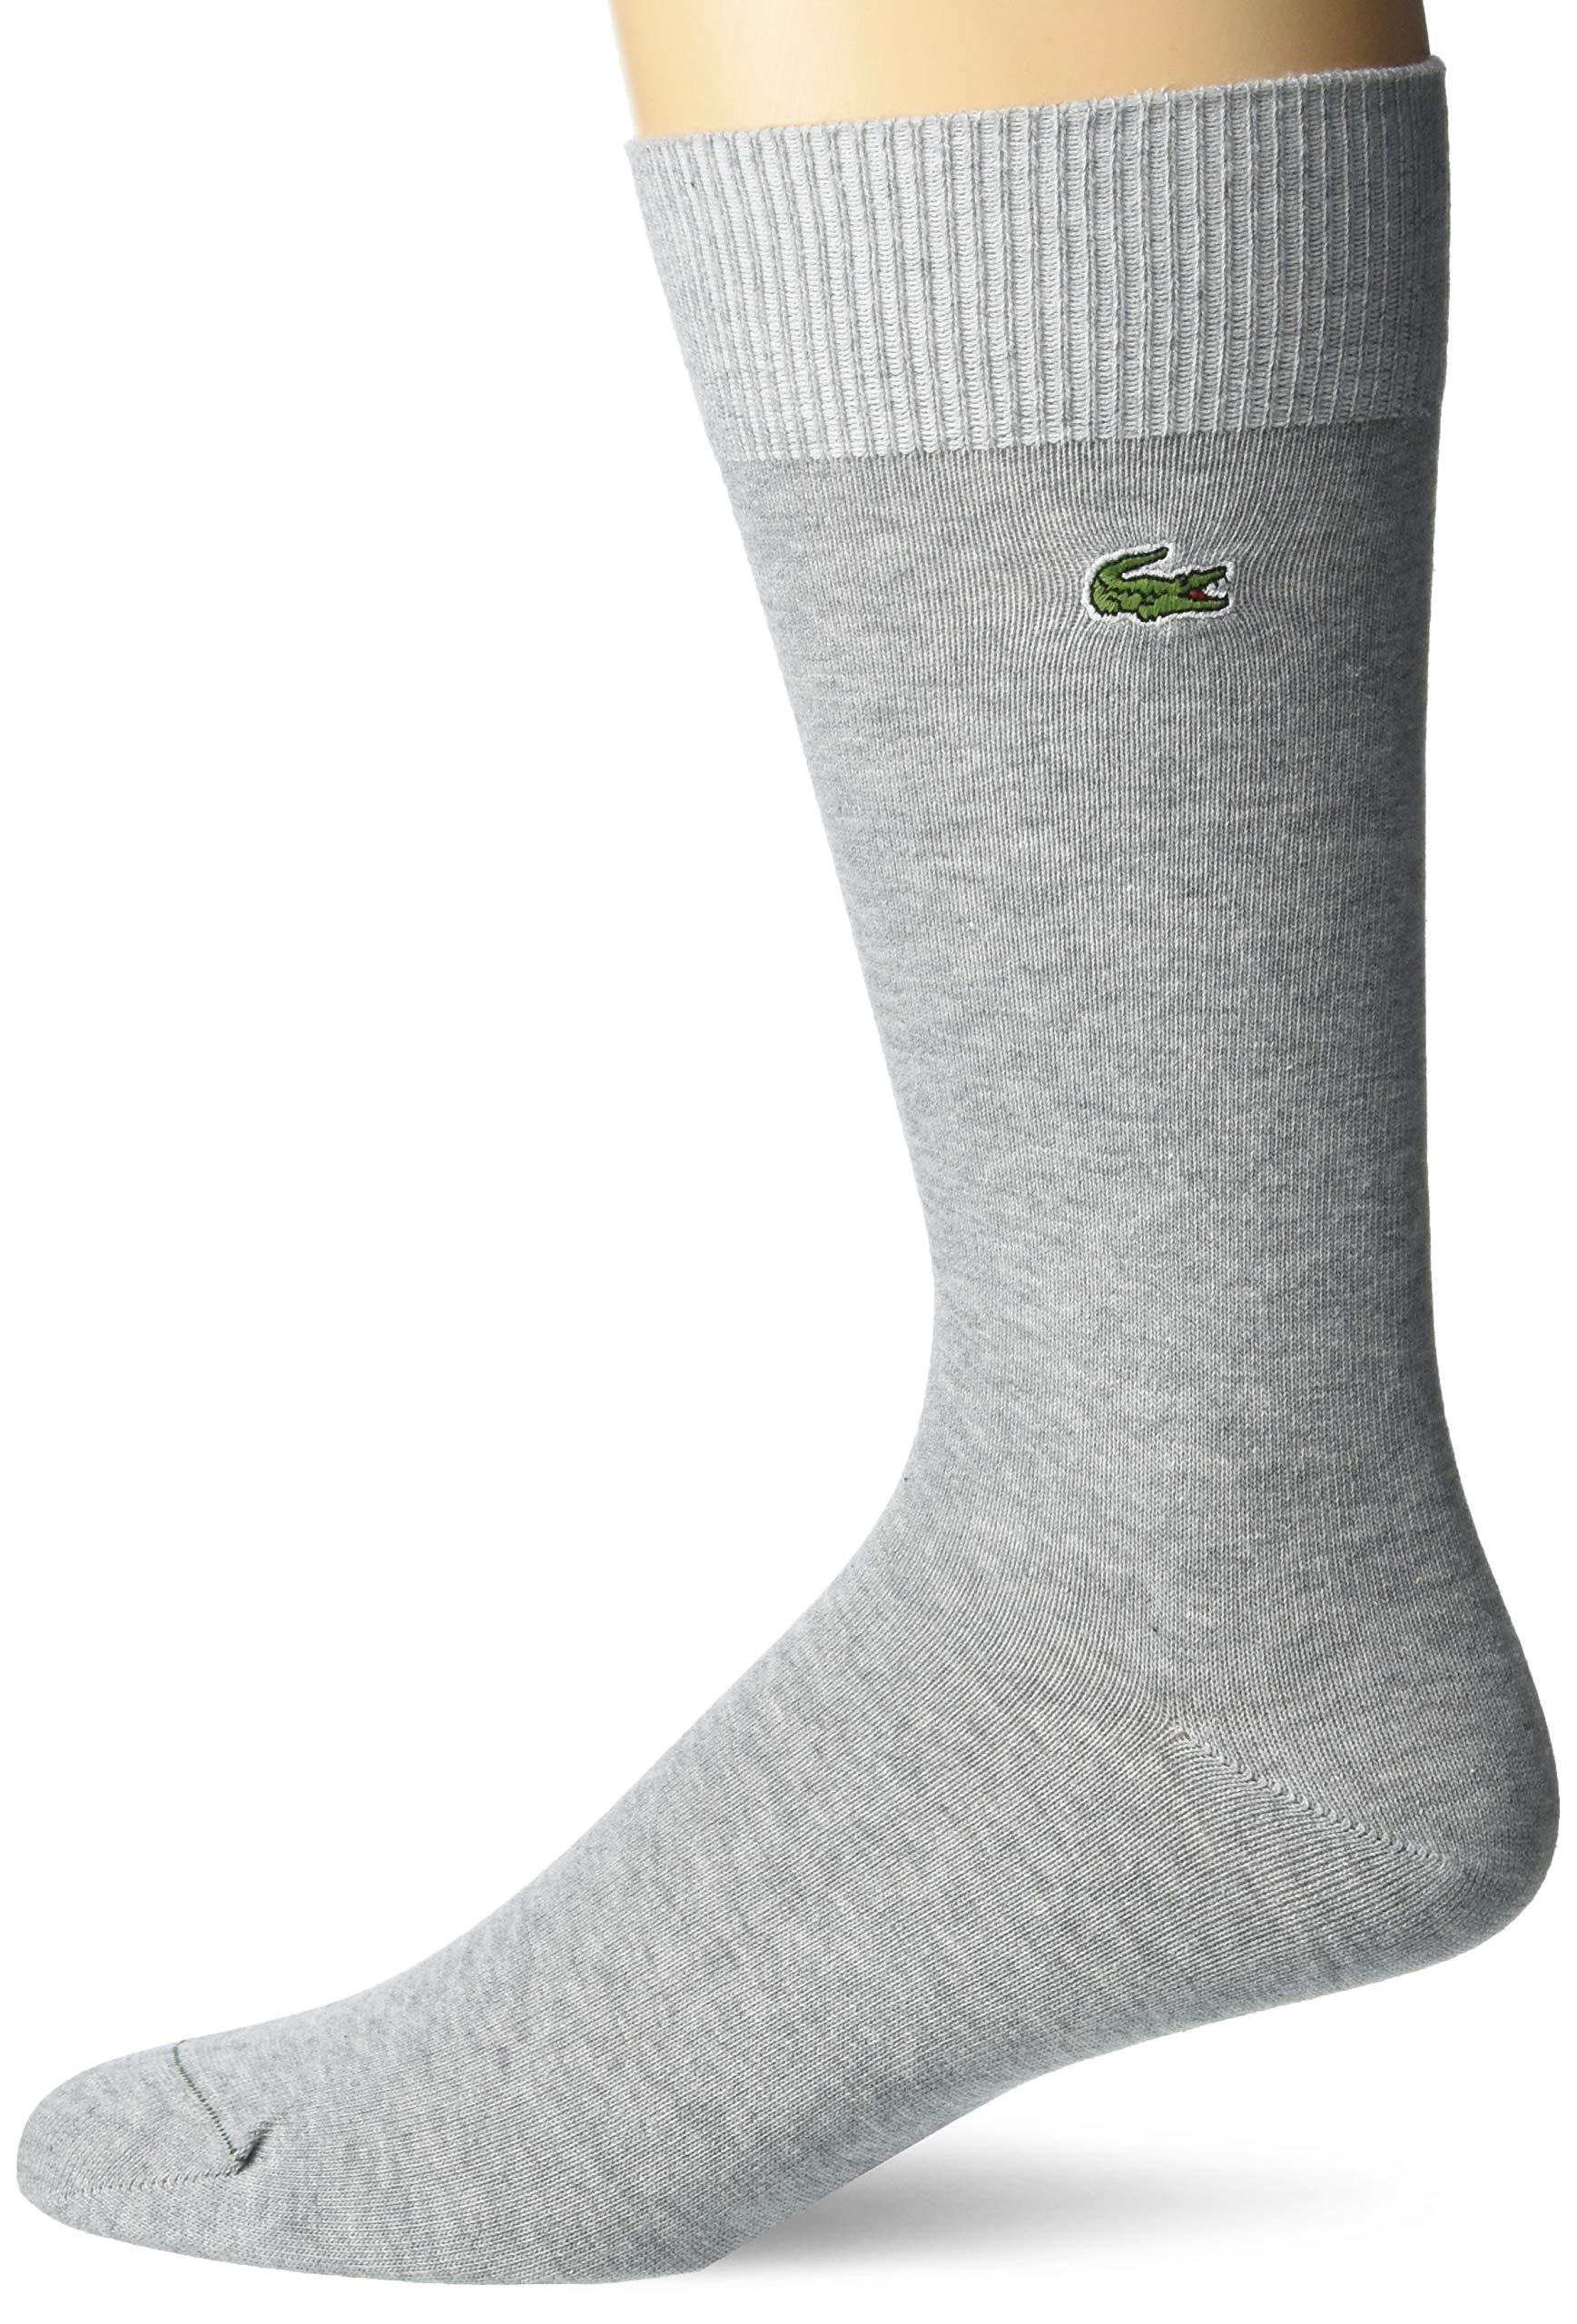 Lacoste Cotton Jersey Tube Socks in Gray for Men - Lyst